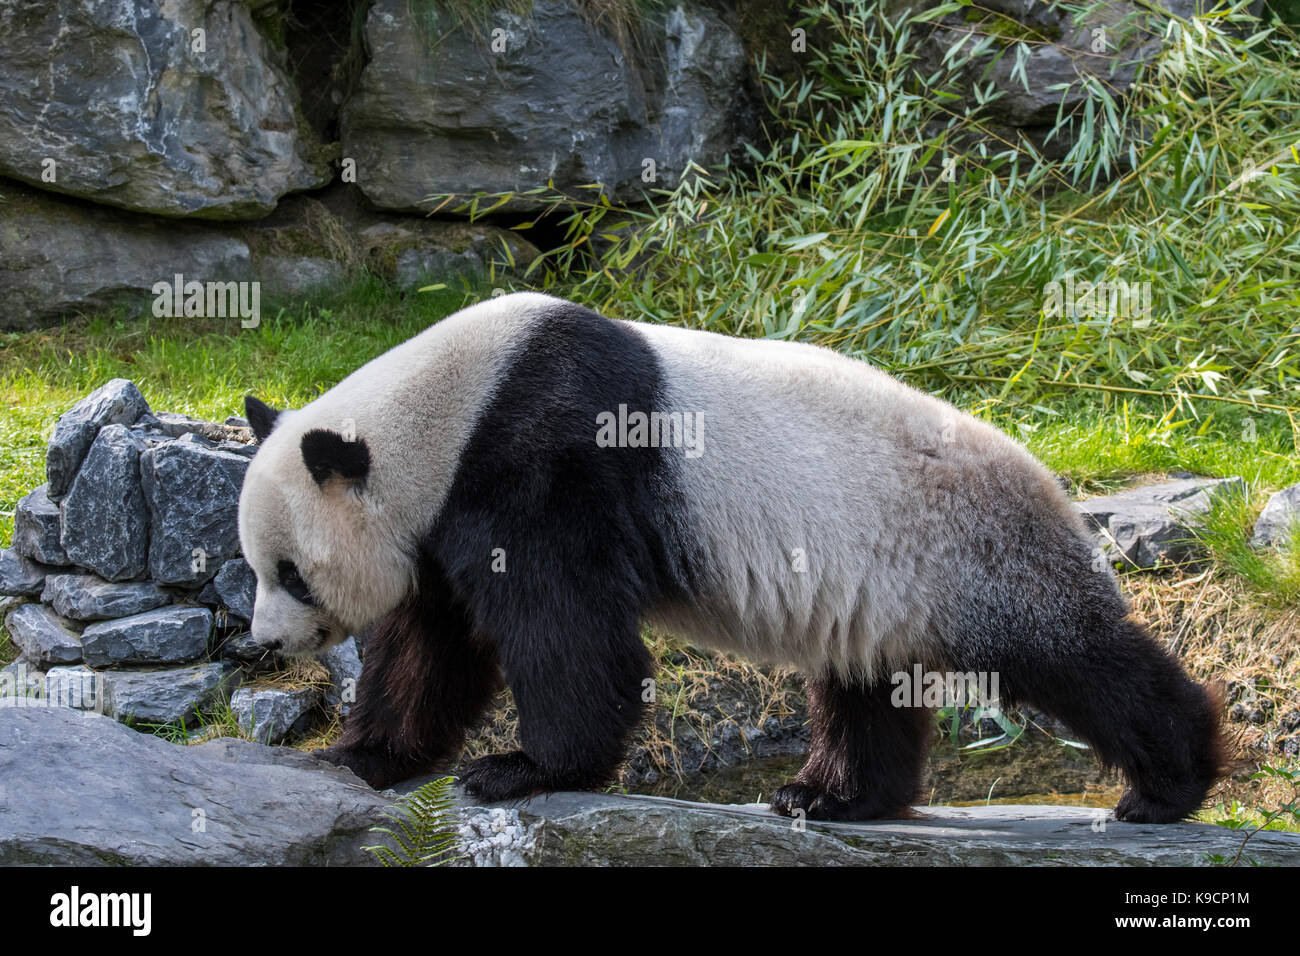 Giant panda (Ailuropoda melanoleuca) juvenile in zoo with bamboo as food Stock Photo